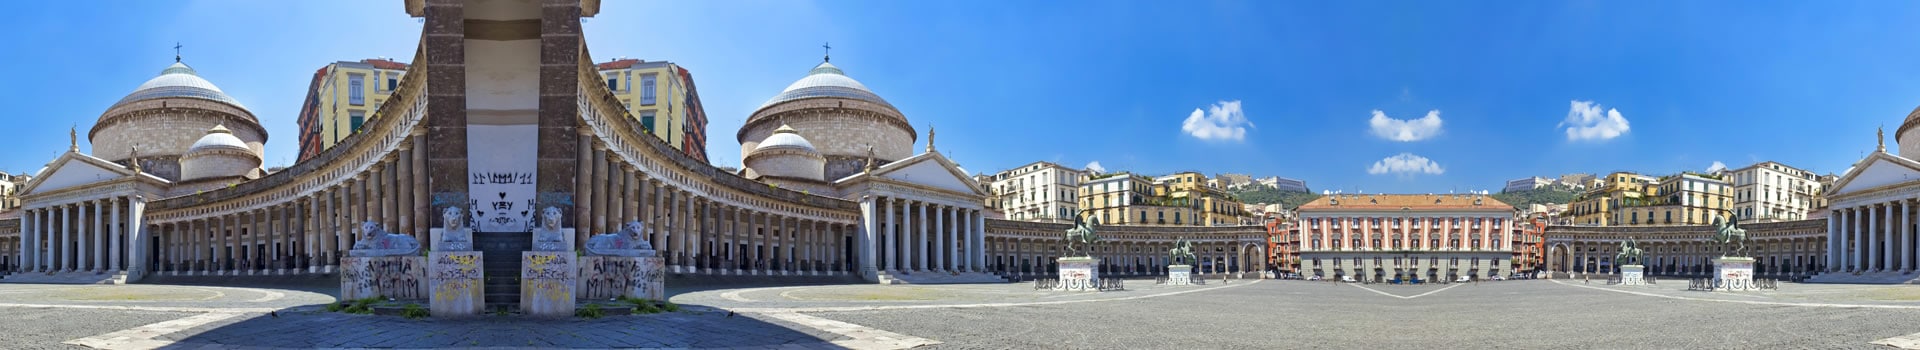 Palermo - Nápoles